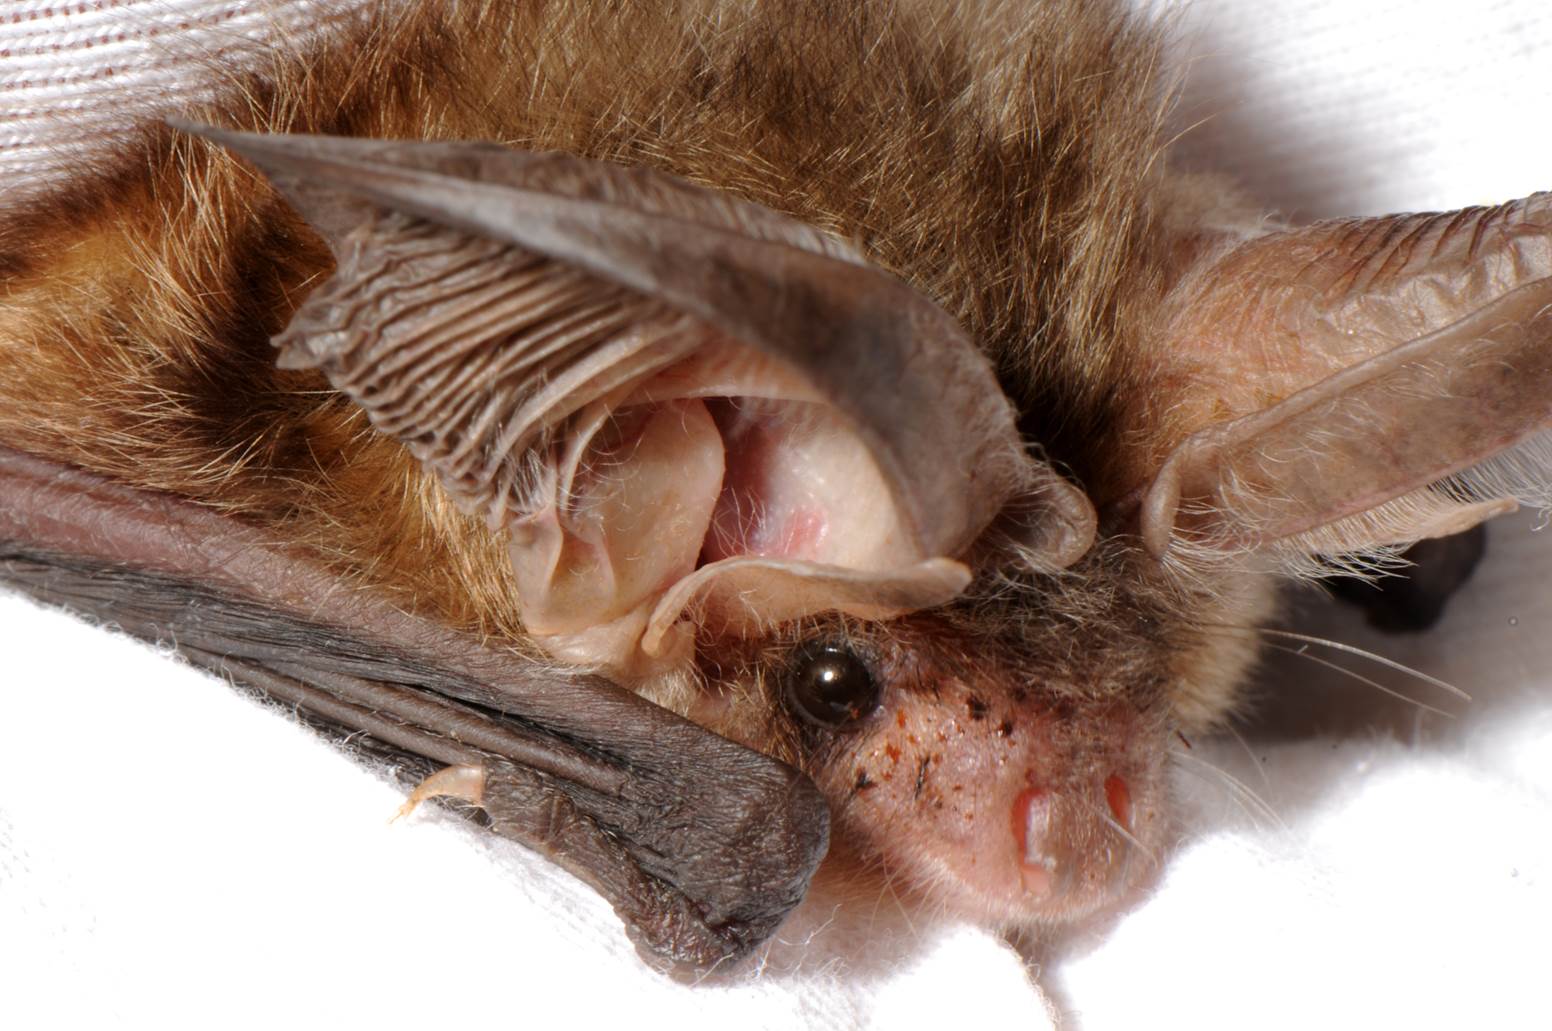 A close-up of a bat

Description automatically generated